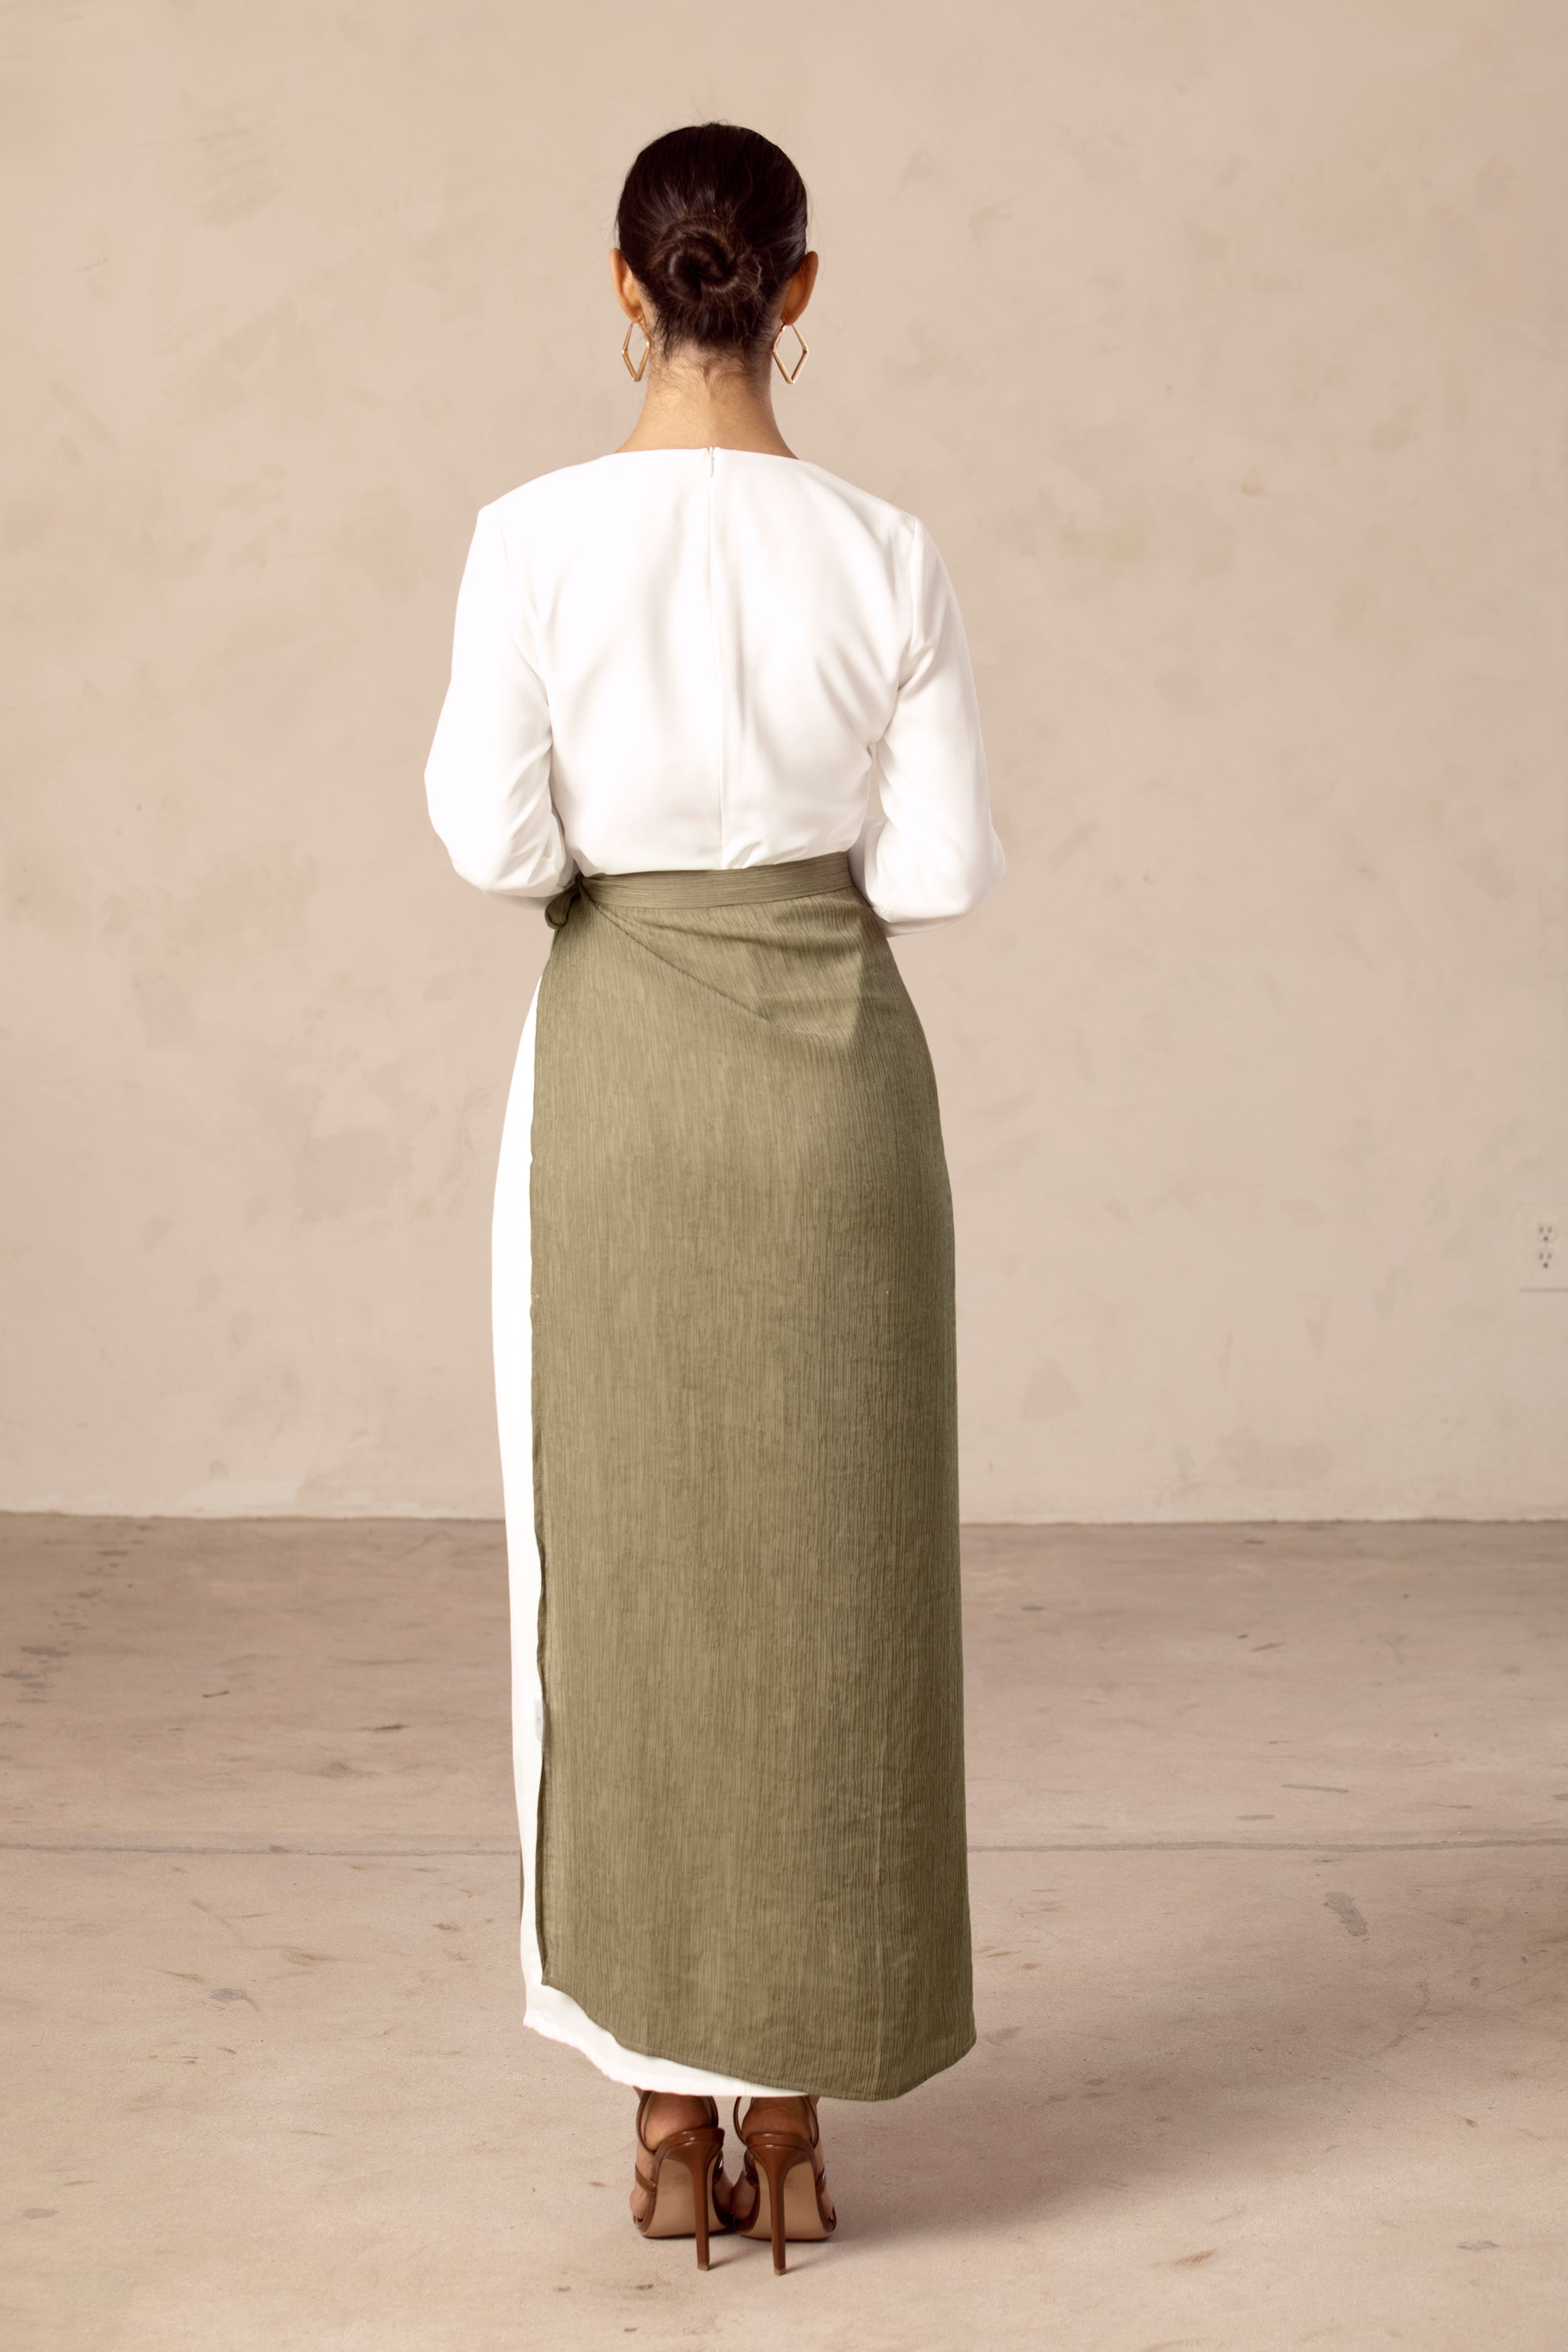 Rana Textured Overlay Tie Skirt - Gardenia Green Veiled Collection 